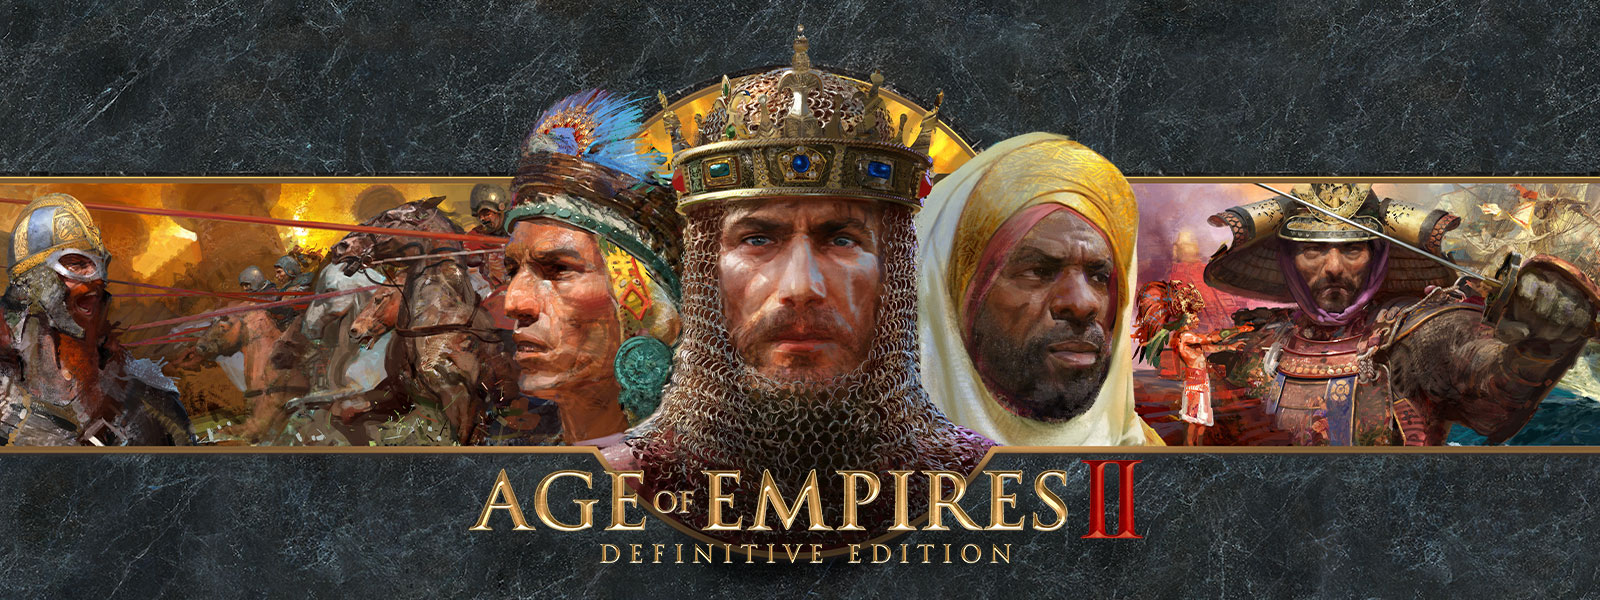 Age of Empires II: Definitive Edition 標誌在以戰爭領袖及其軍隊為特點的灰色板岩背景上